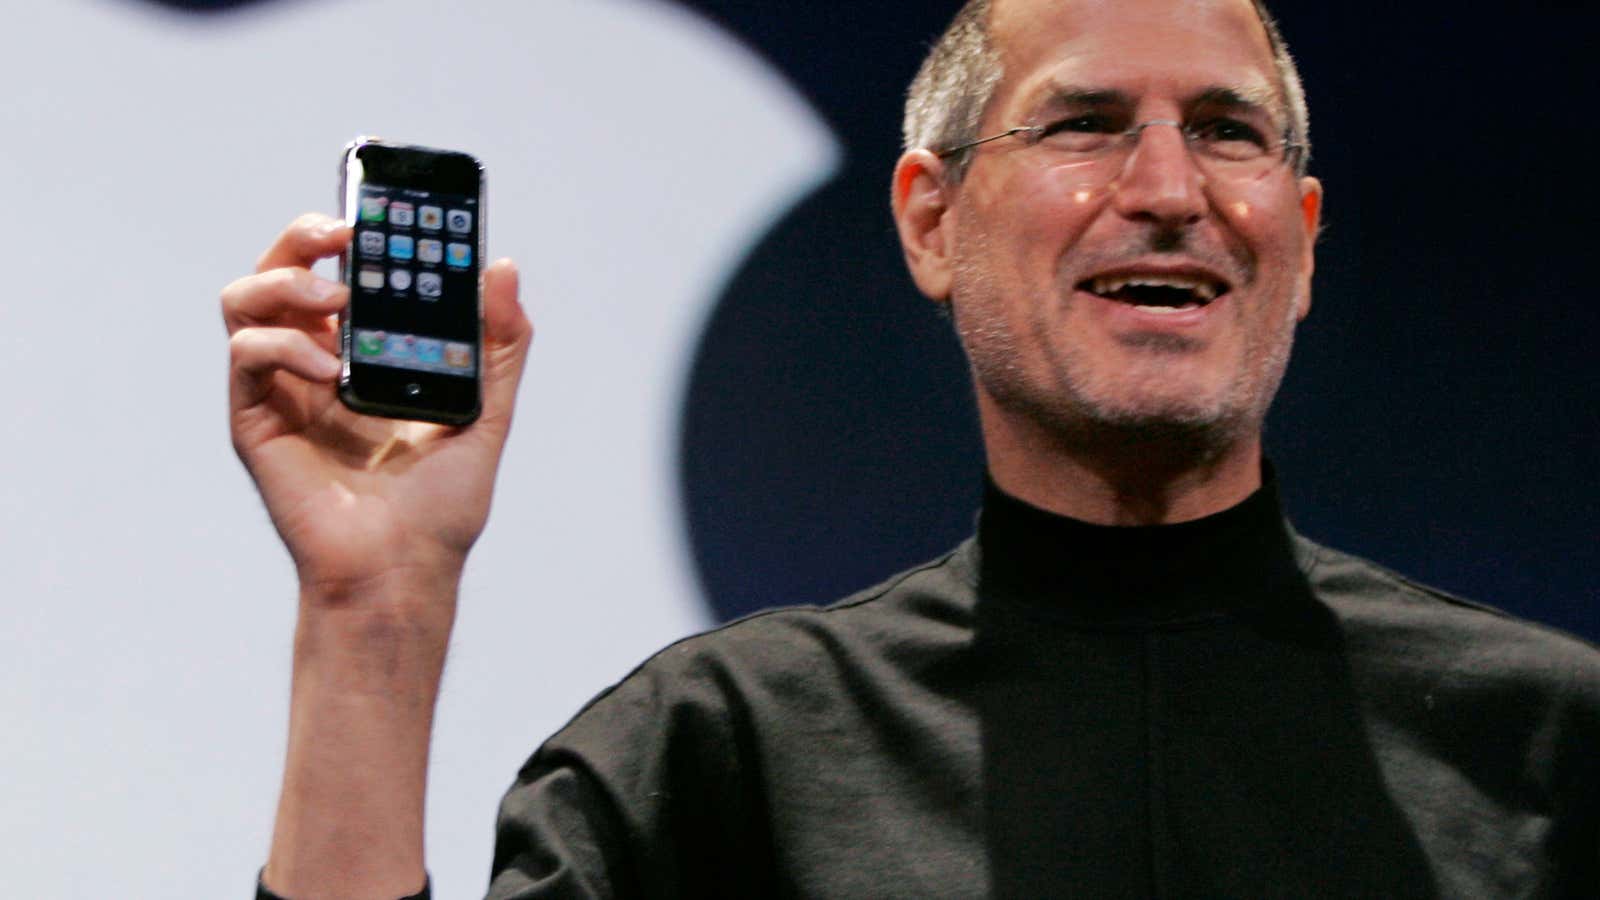 Steve Jobs introducing the stylus-less iPhone.